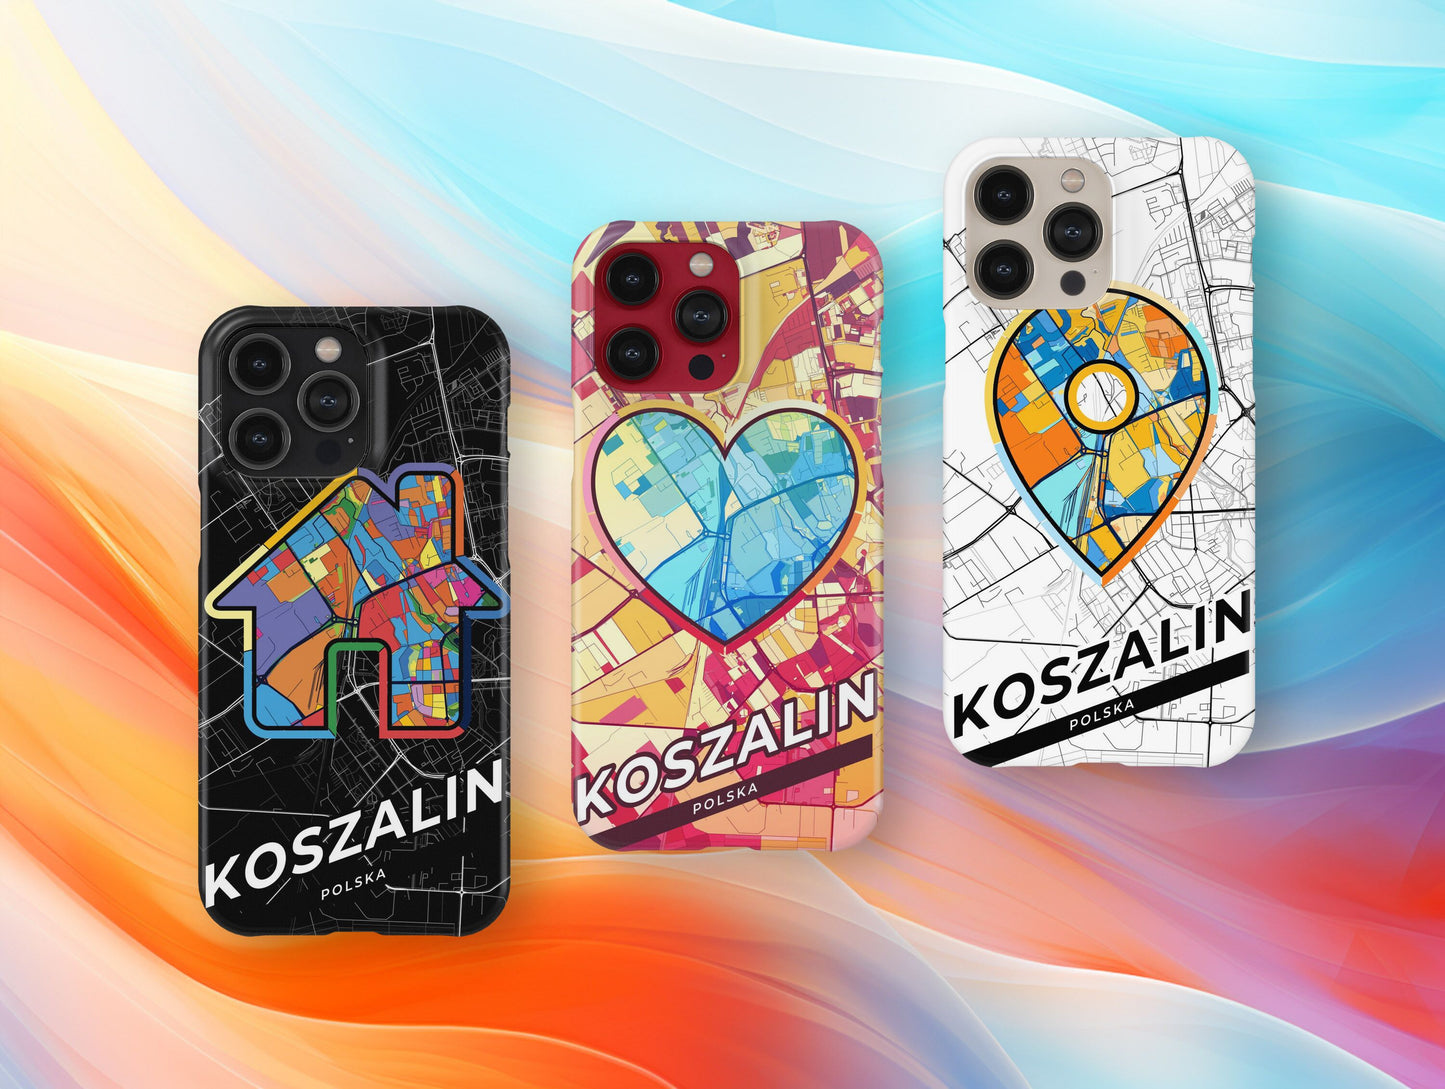 Koszalin Poland slim phone case with colorful icon. Birthday, wedding or housewarming gift. Couple match cases.